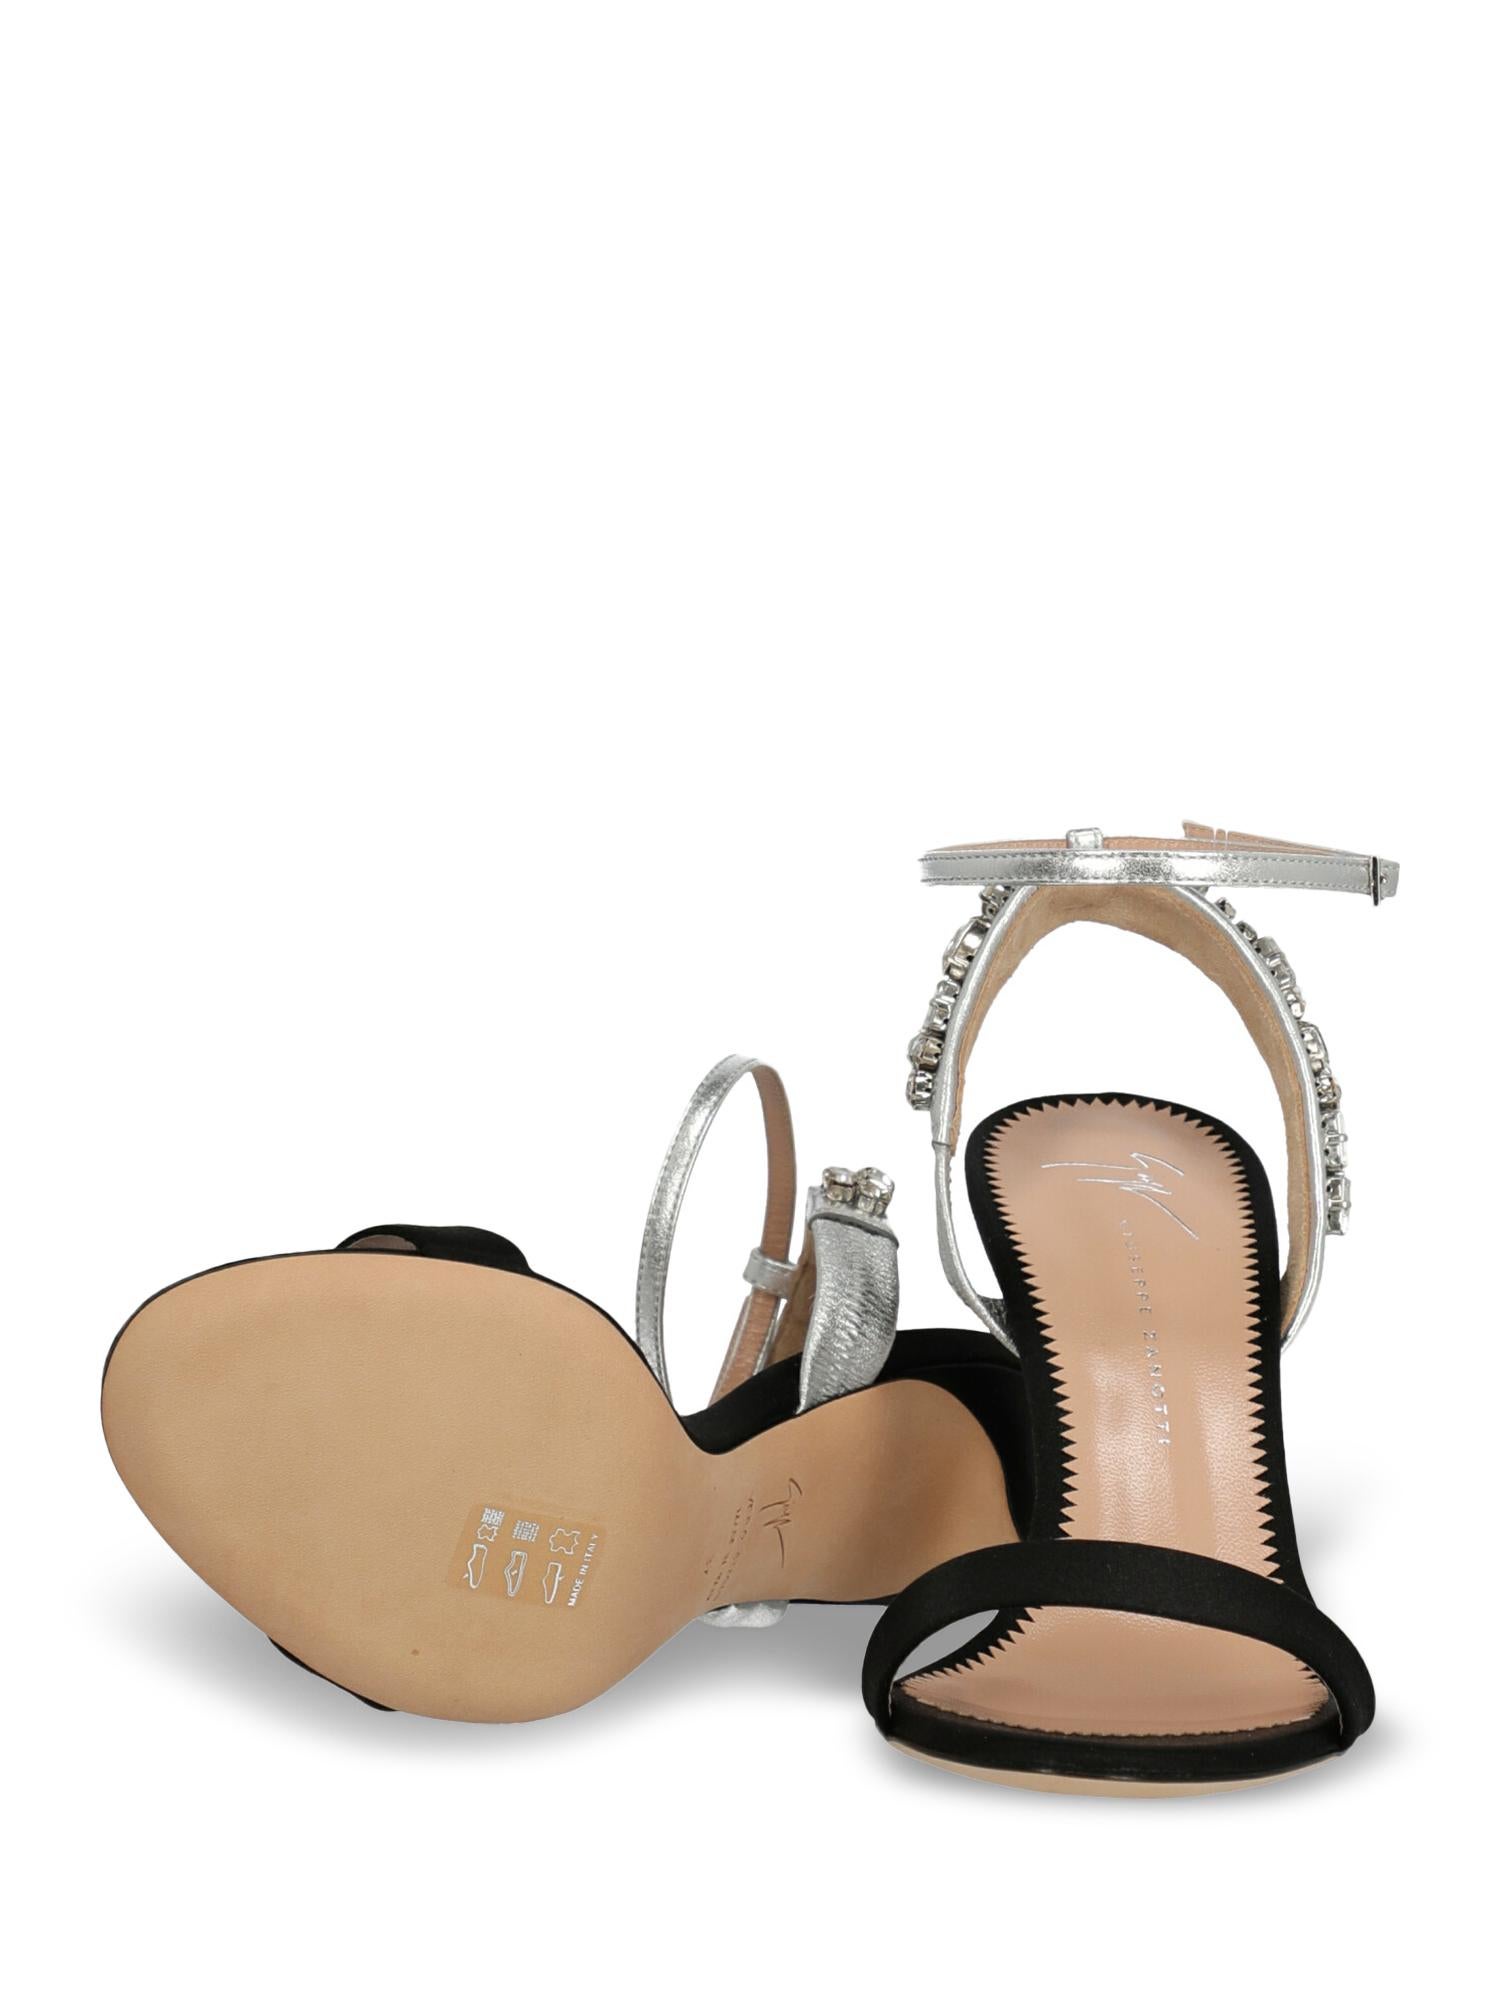 Giuseppe Zanotti Woman Sandals Black, Silver EU 37 In Excellent Condition For Sale In Milan, IT